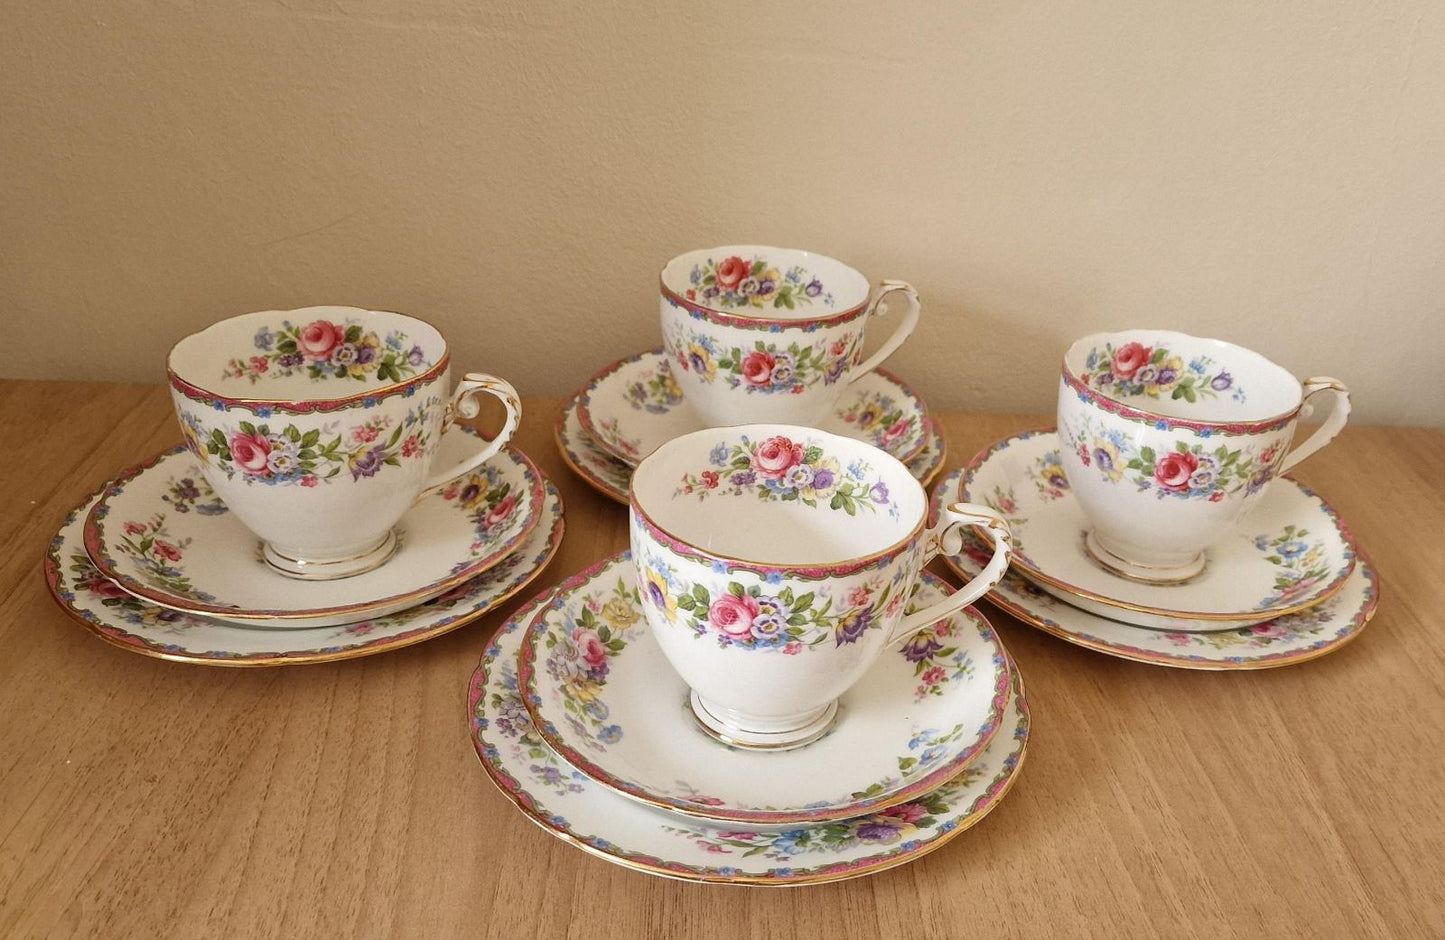 Royal Grafton Bone China Floral Tea trio cup set